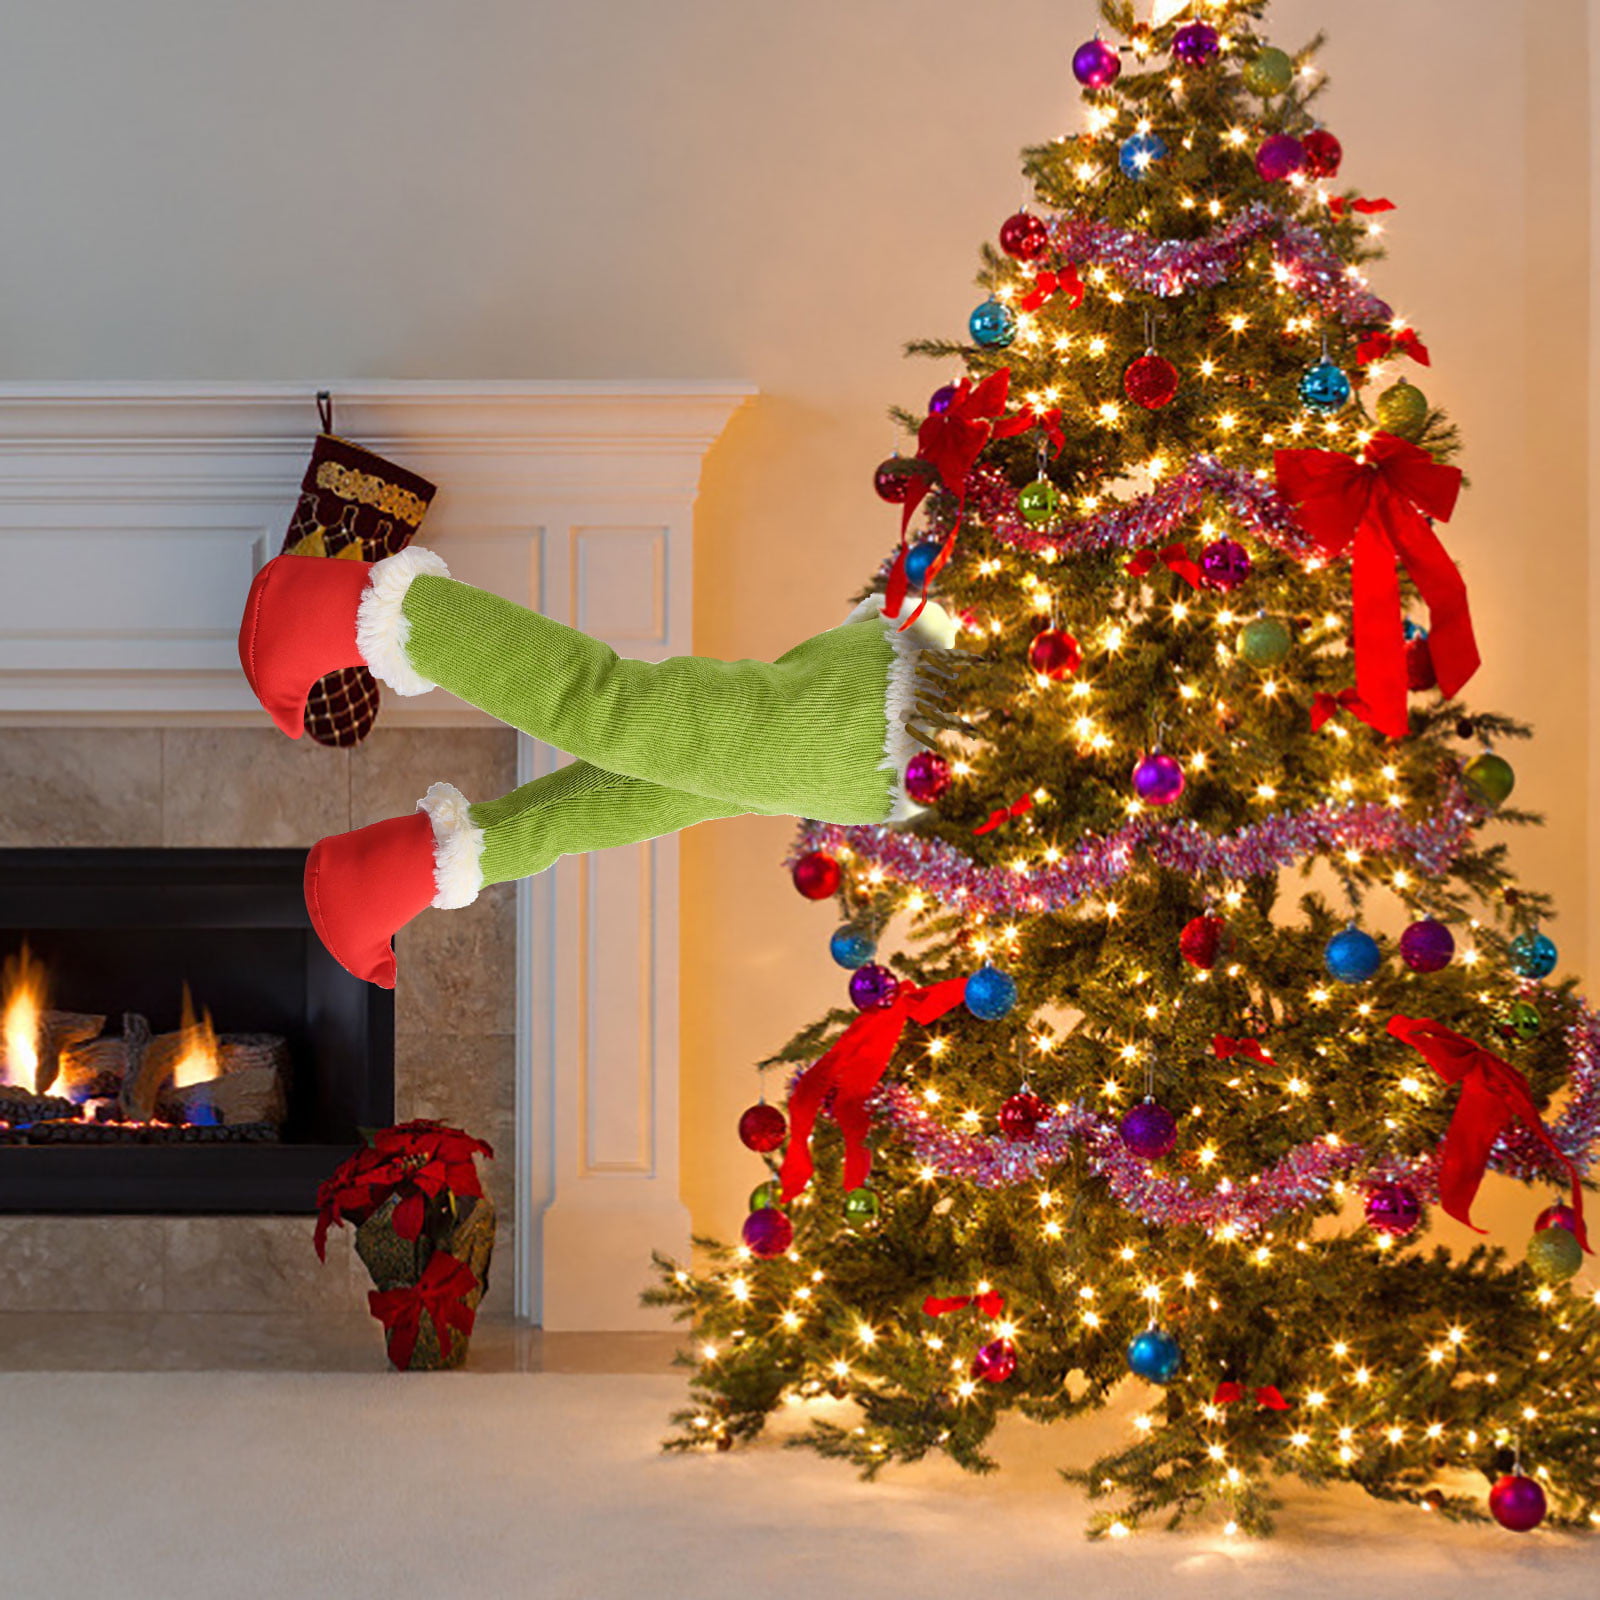 Christmas Decor 15.7 Plush Legs for Christmas Decorations Stuffed Legs for Christmas Tree Home Party Wreaths Decor A